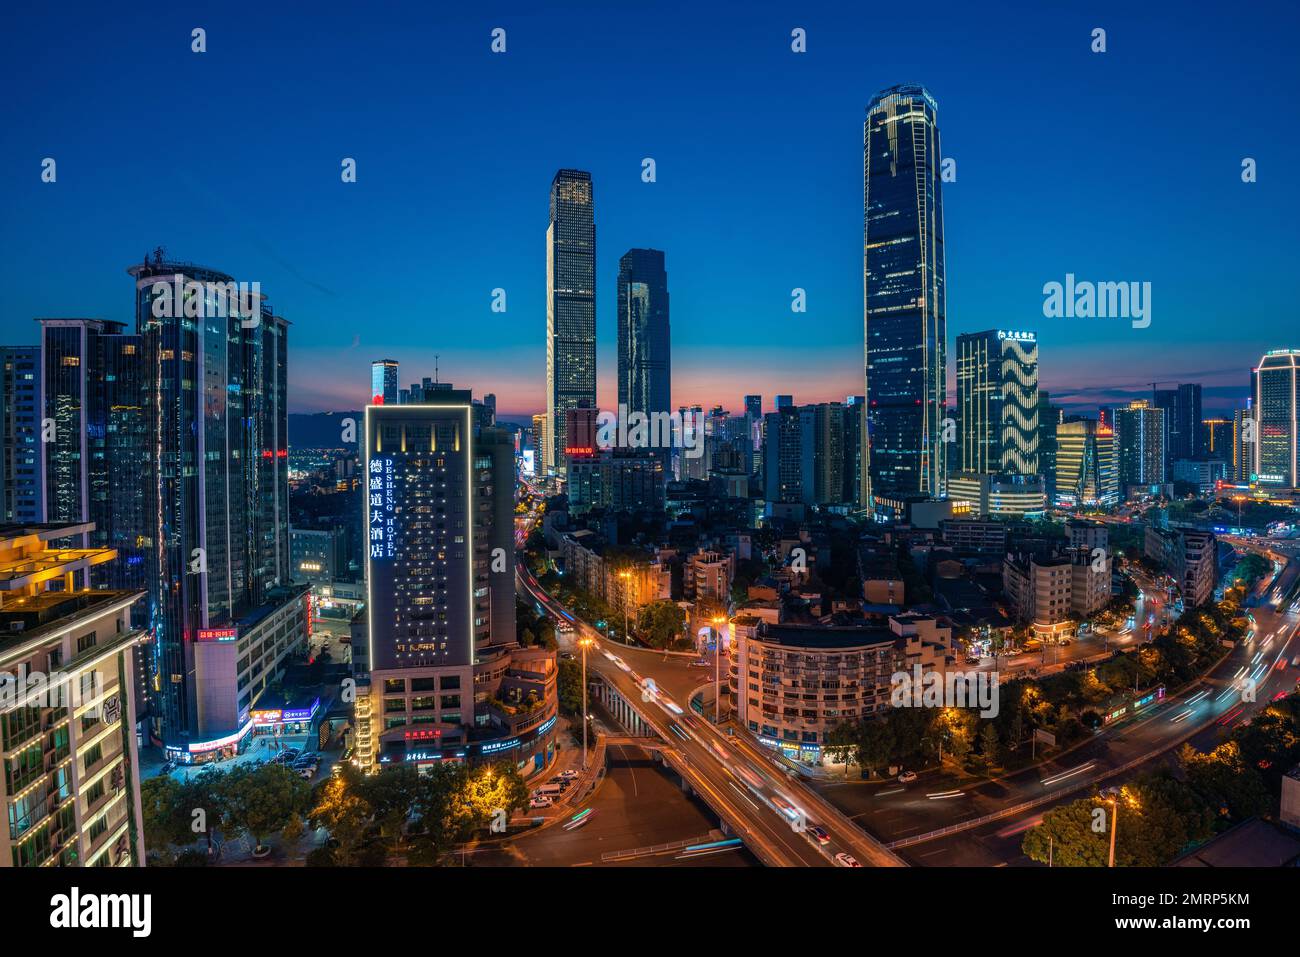 Changsha wharf shimao international financial center world financial center Stock Photo